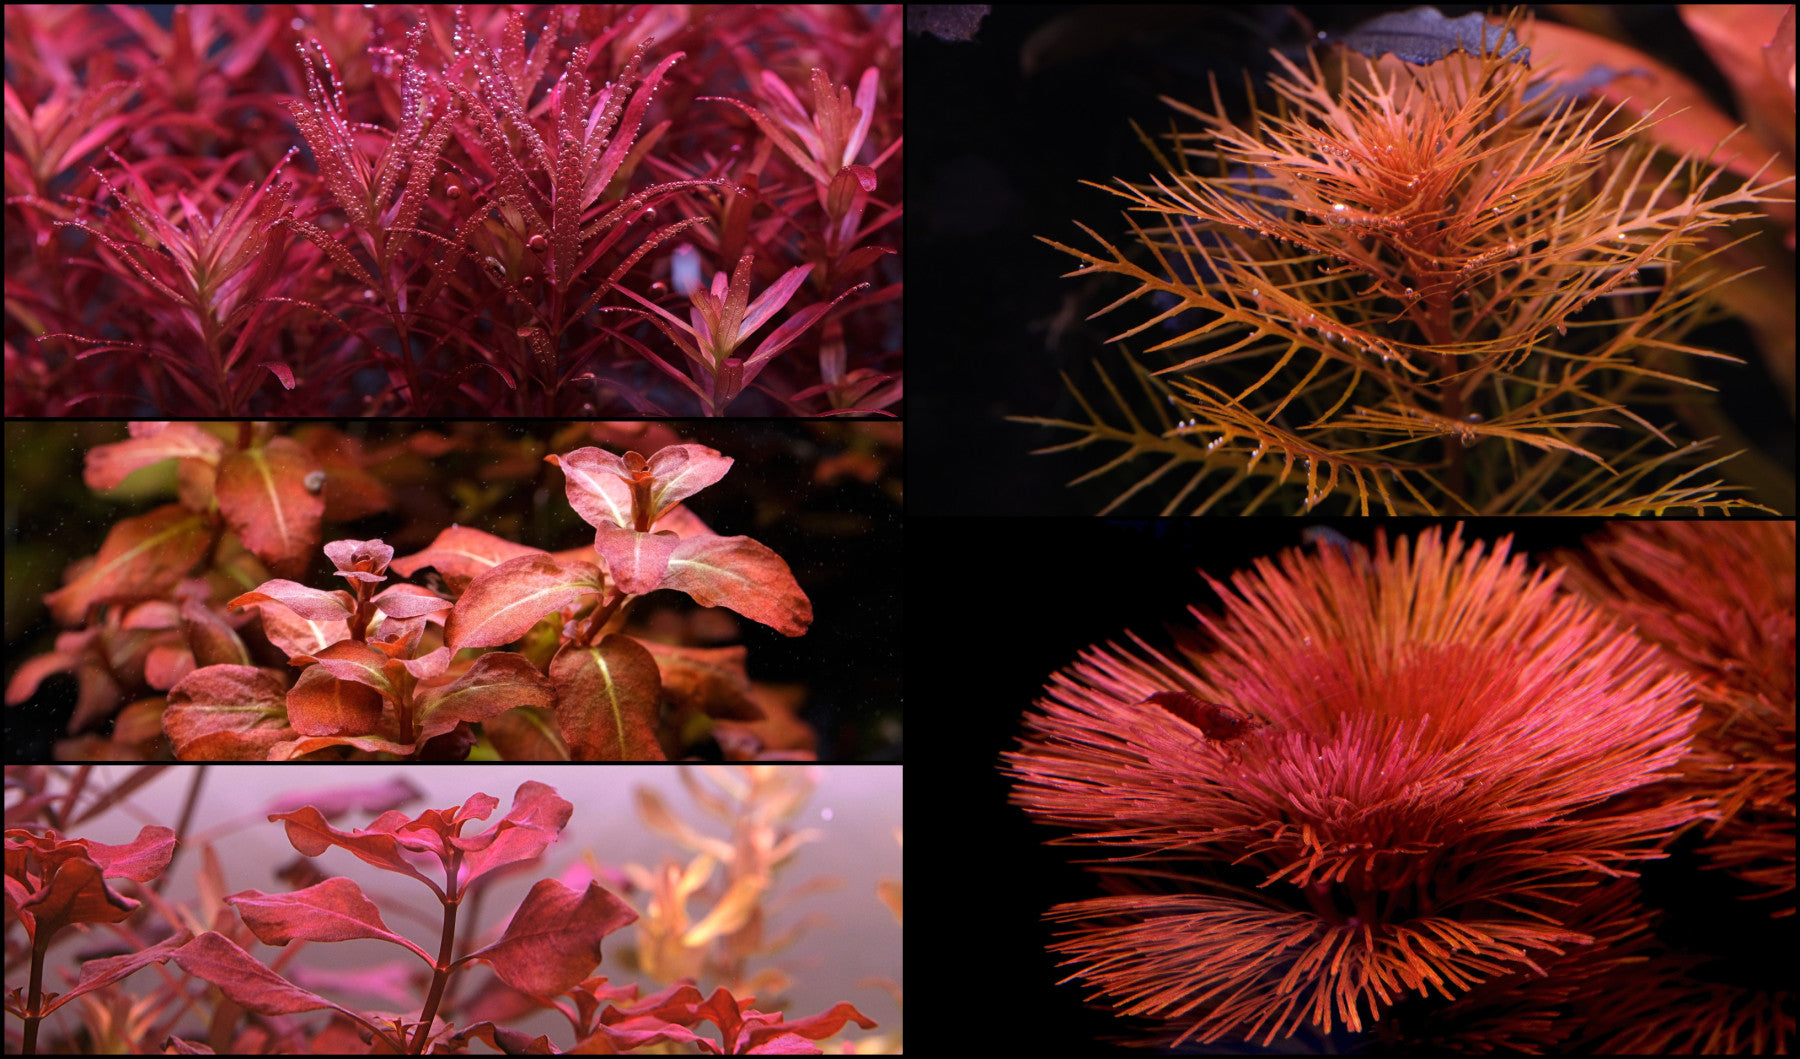 How to grow red aquarium plants